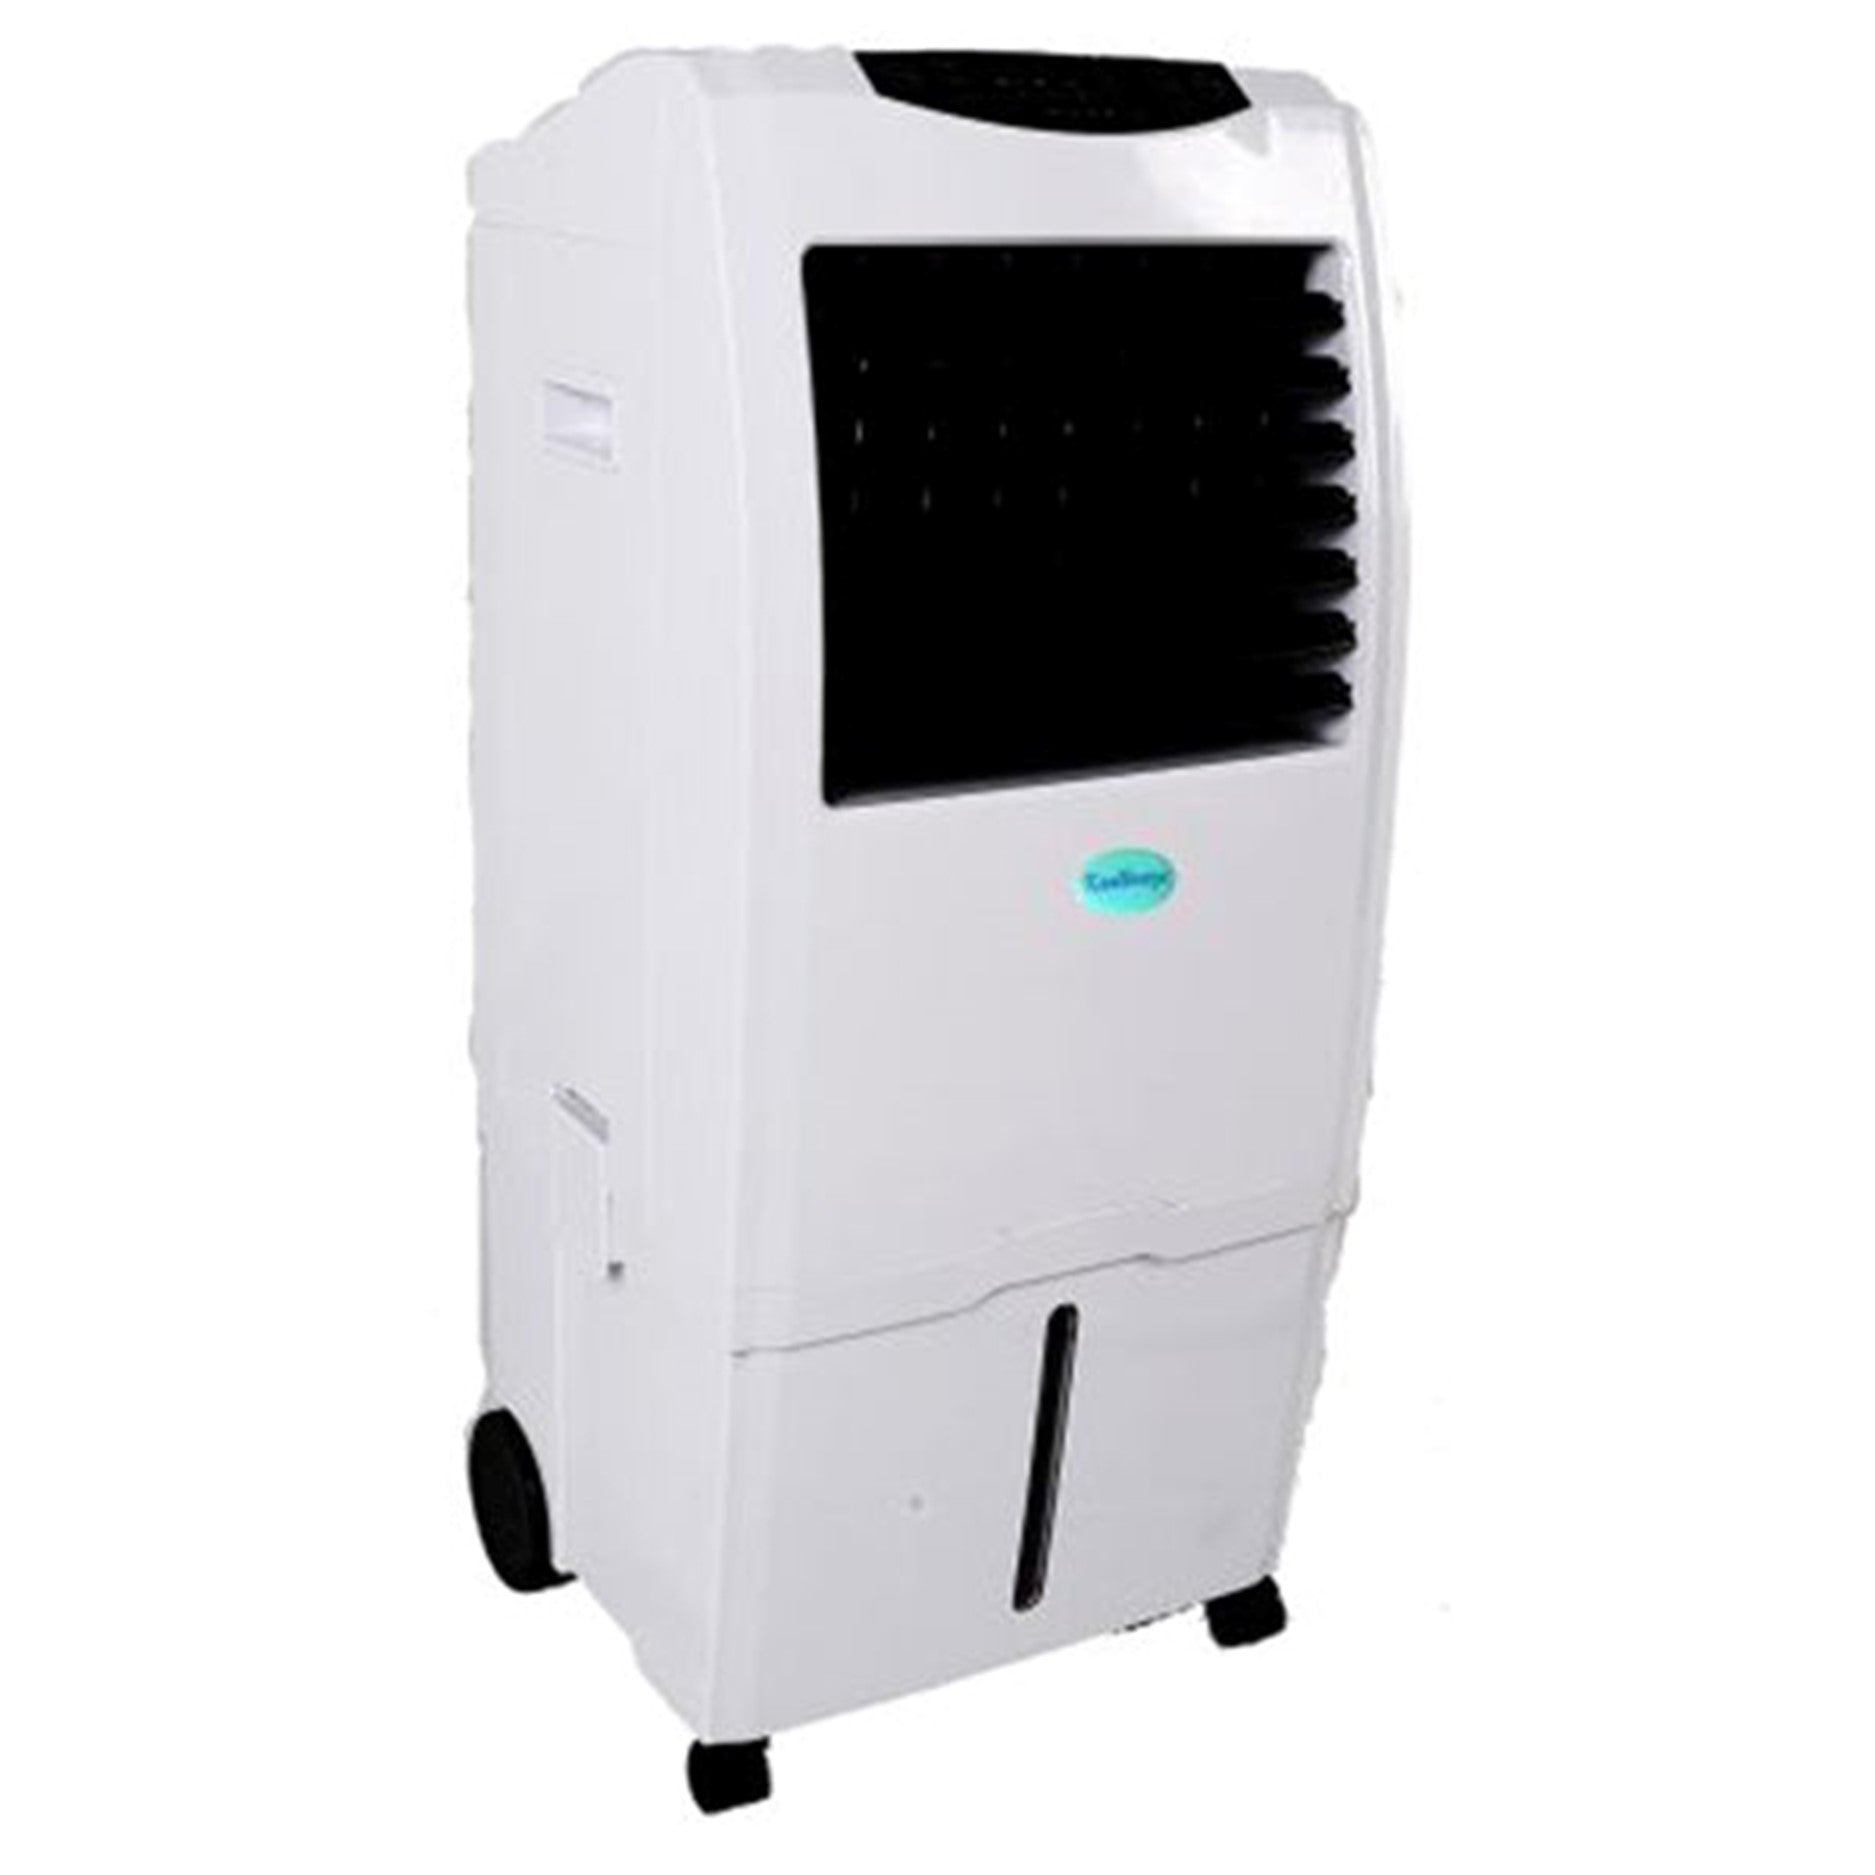 Image of a Koolbreeze Koolmist 300 Evaporative Misting Fan Cooler on a white background